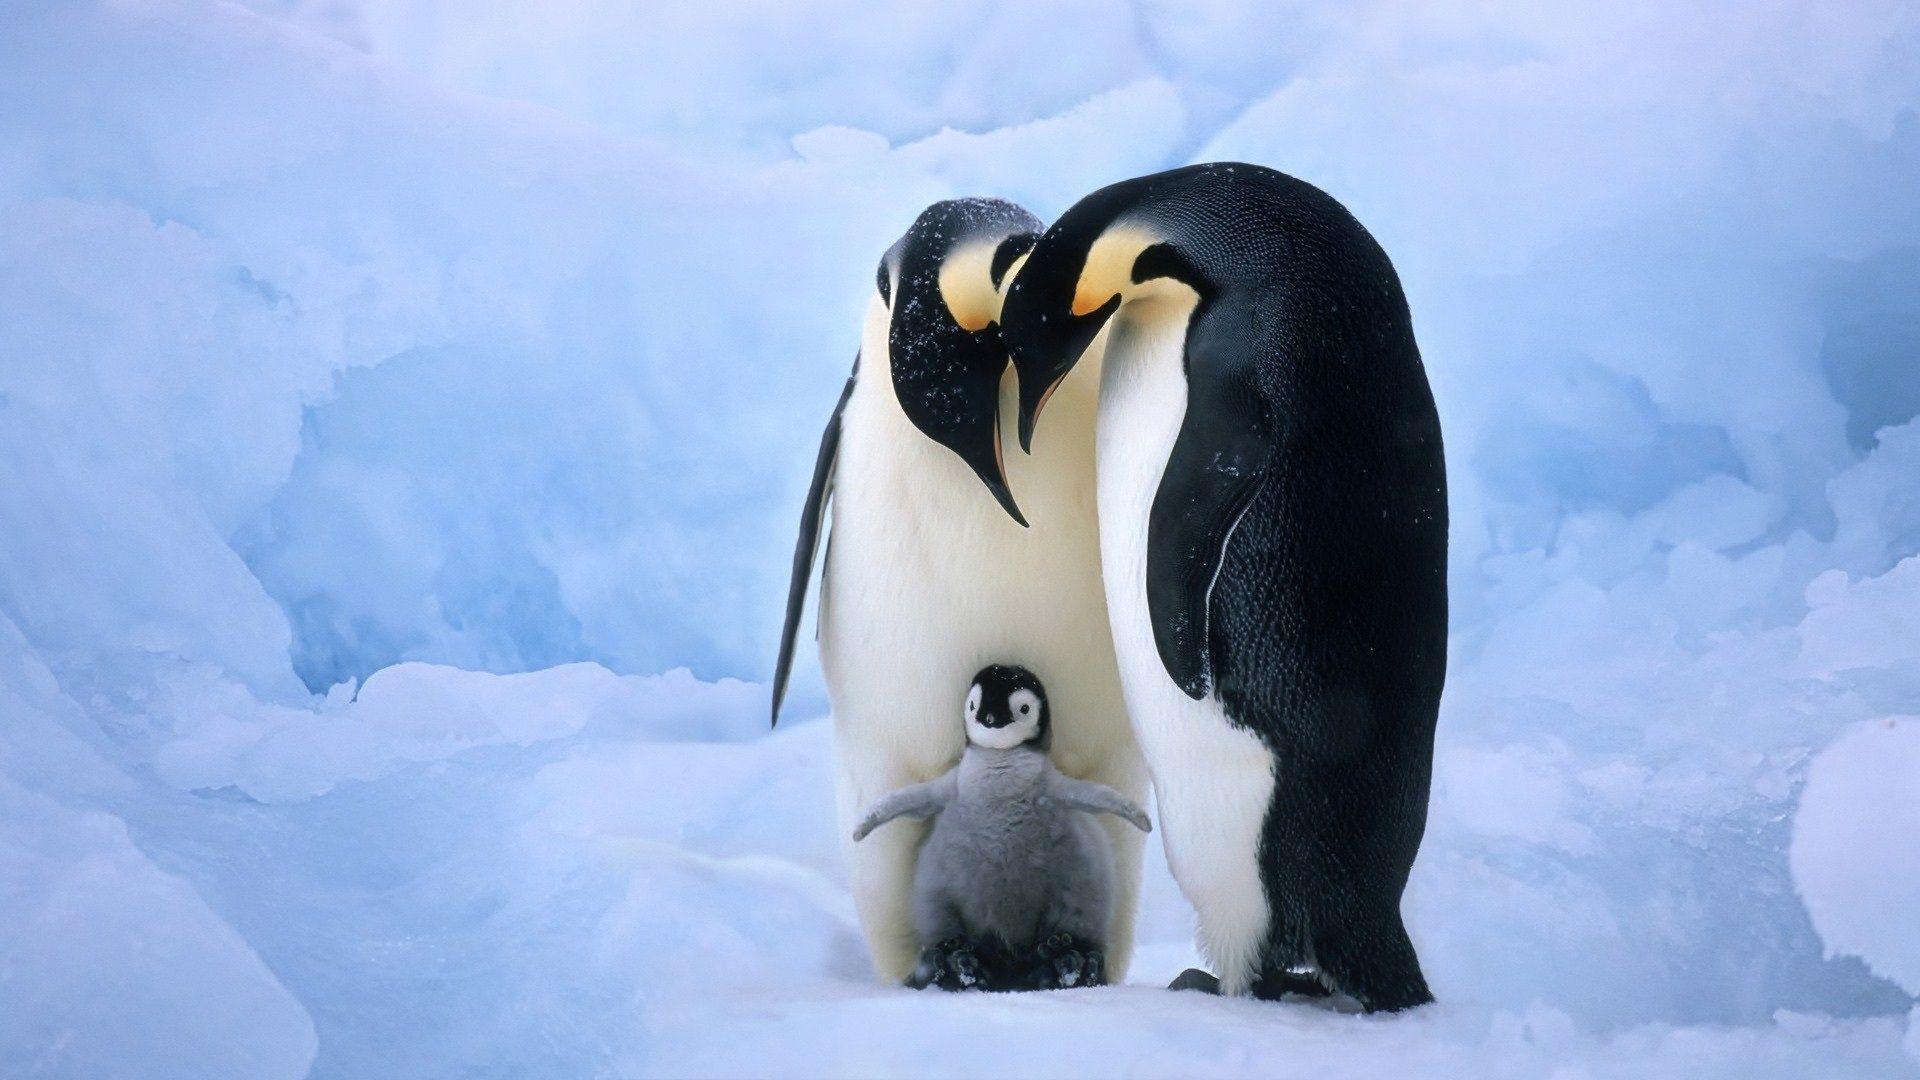 Baby penguin with parents wallpaper download. Wallpaper